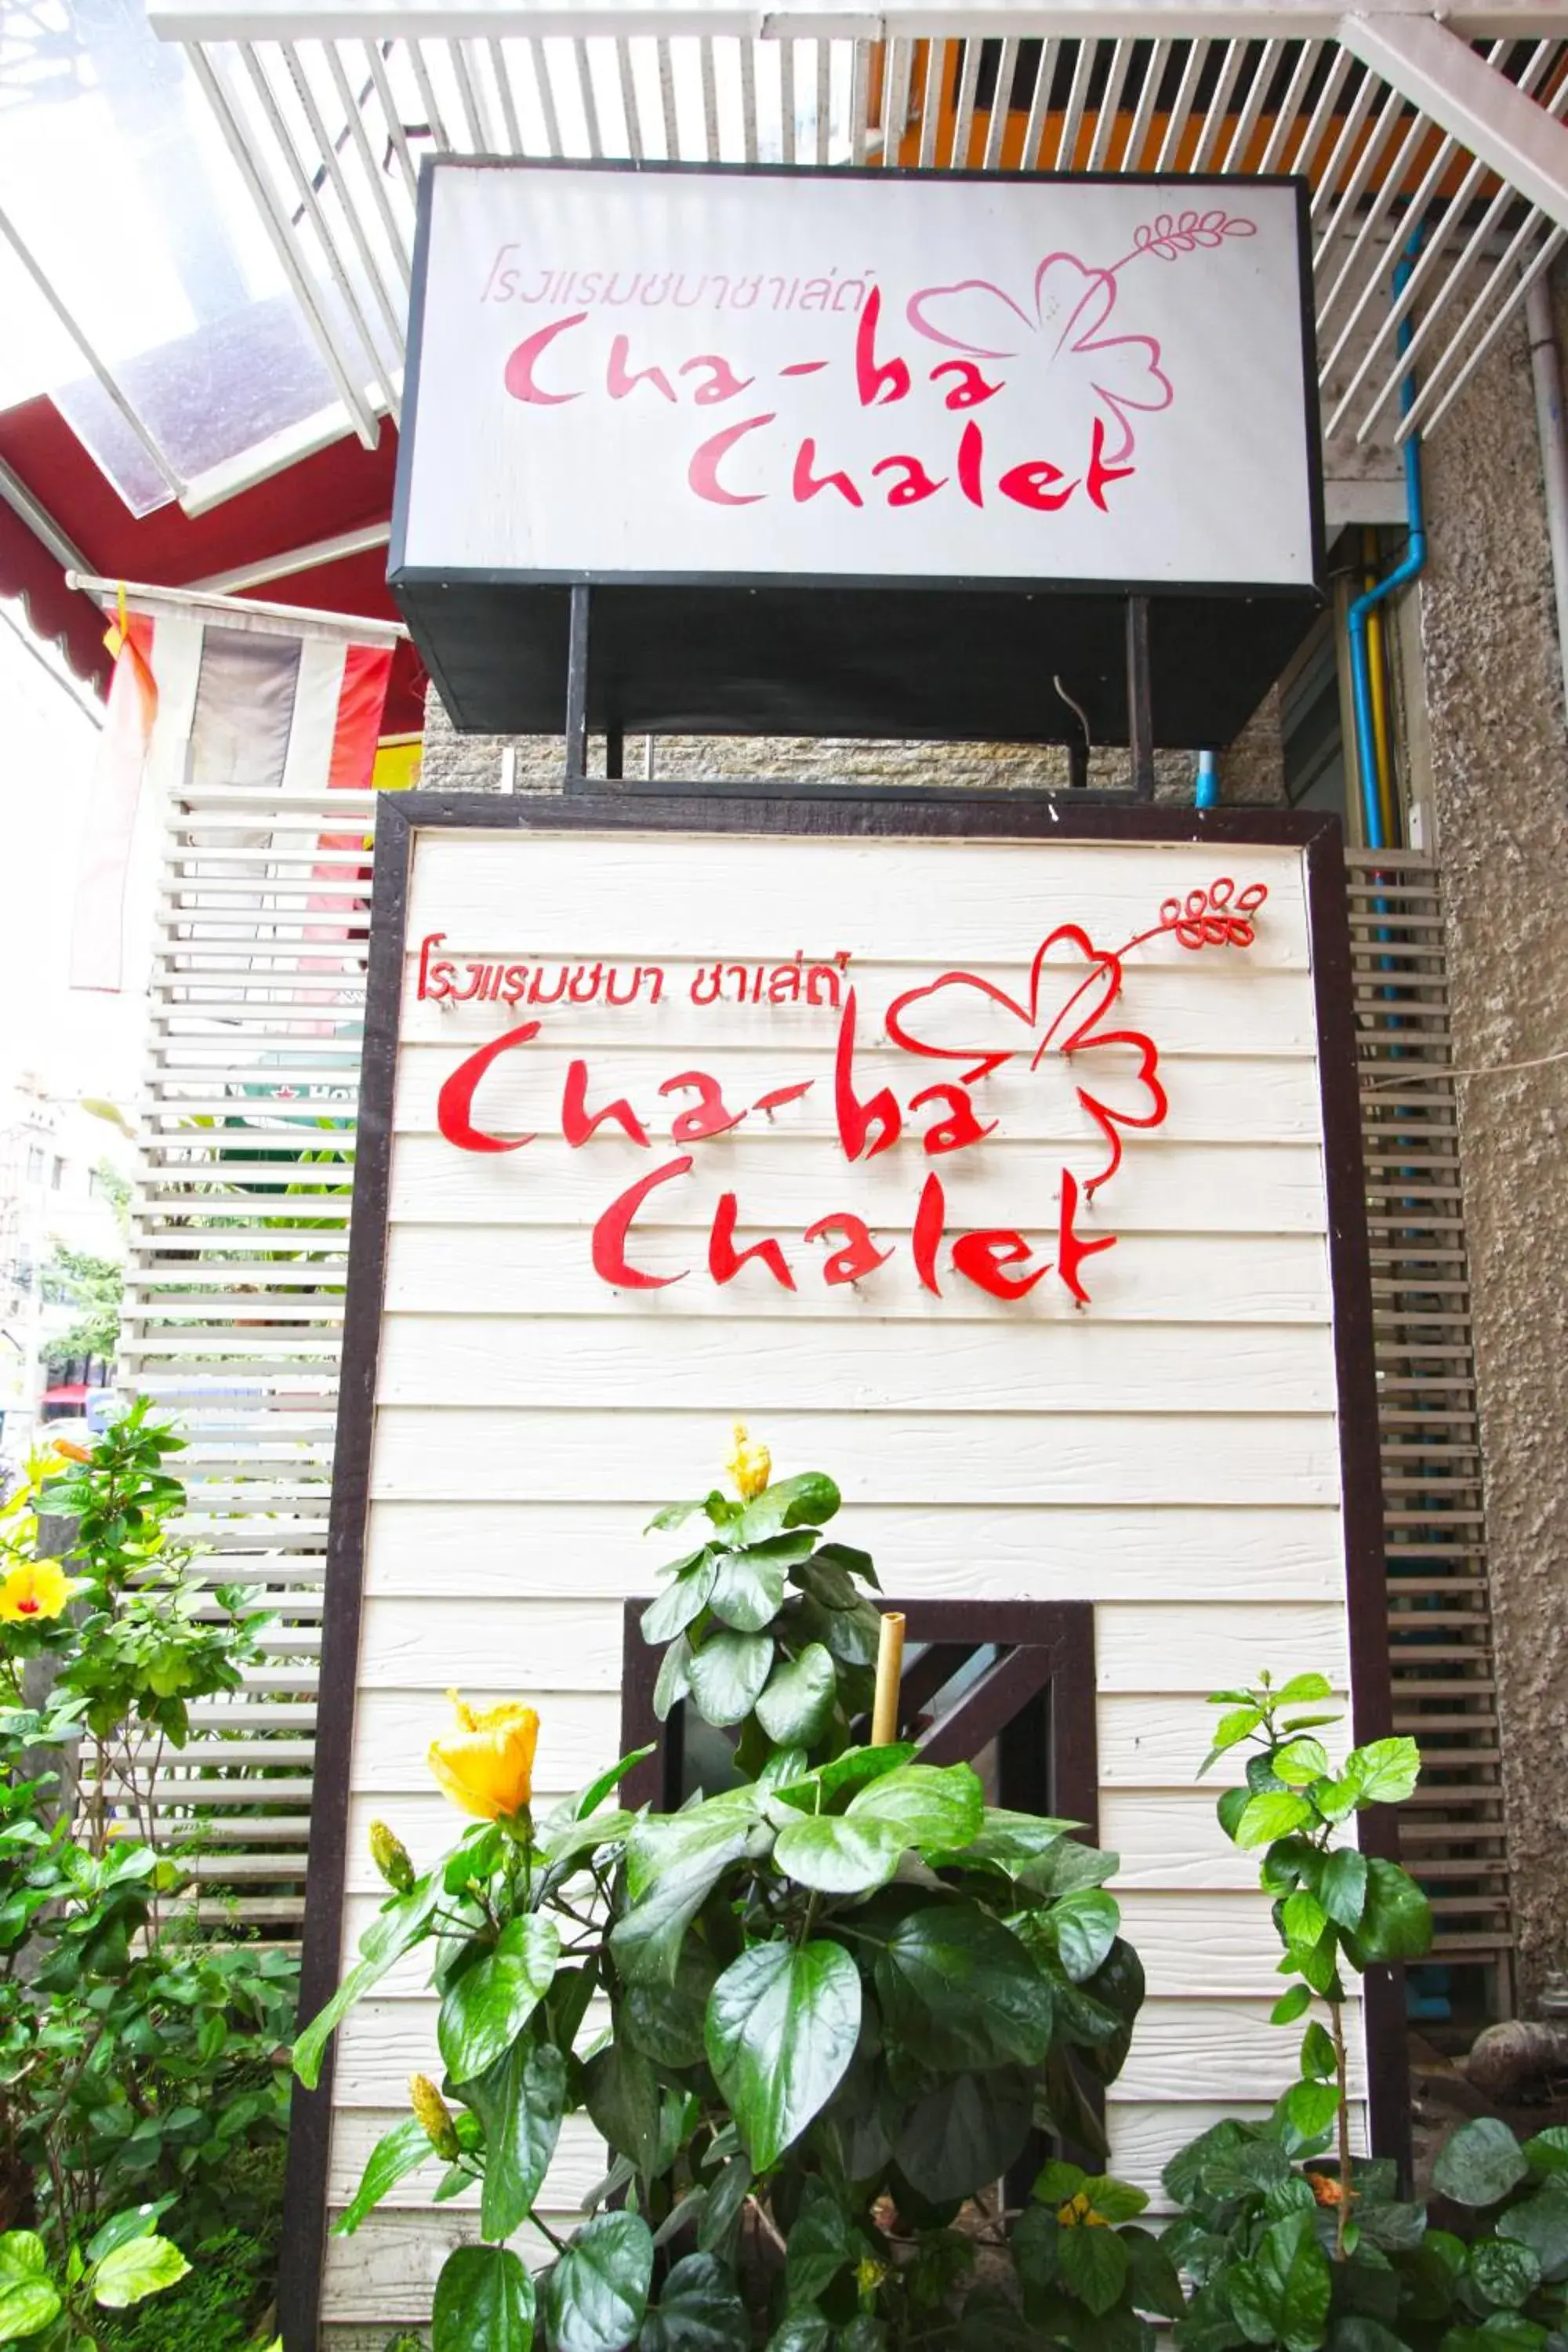 Chaba Chalet